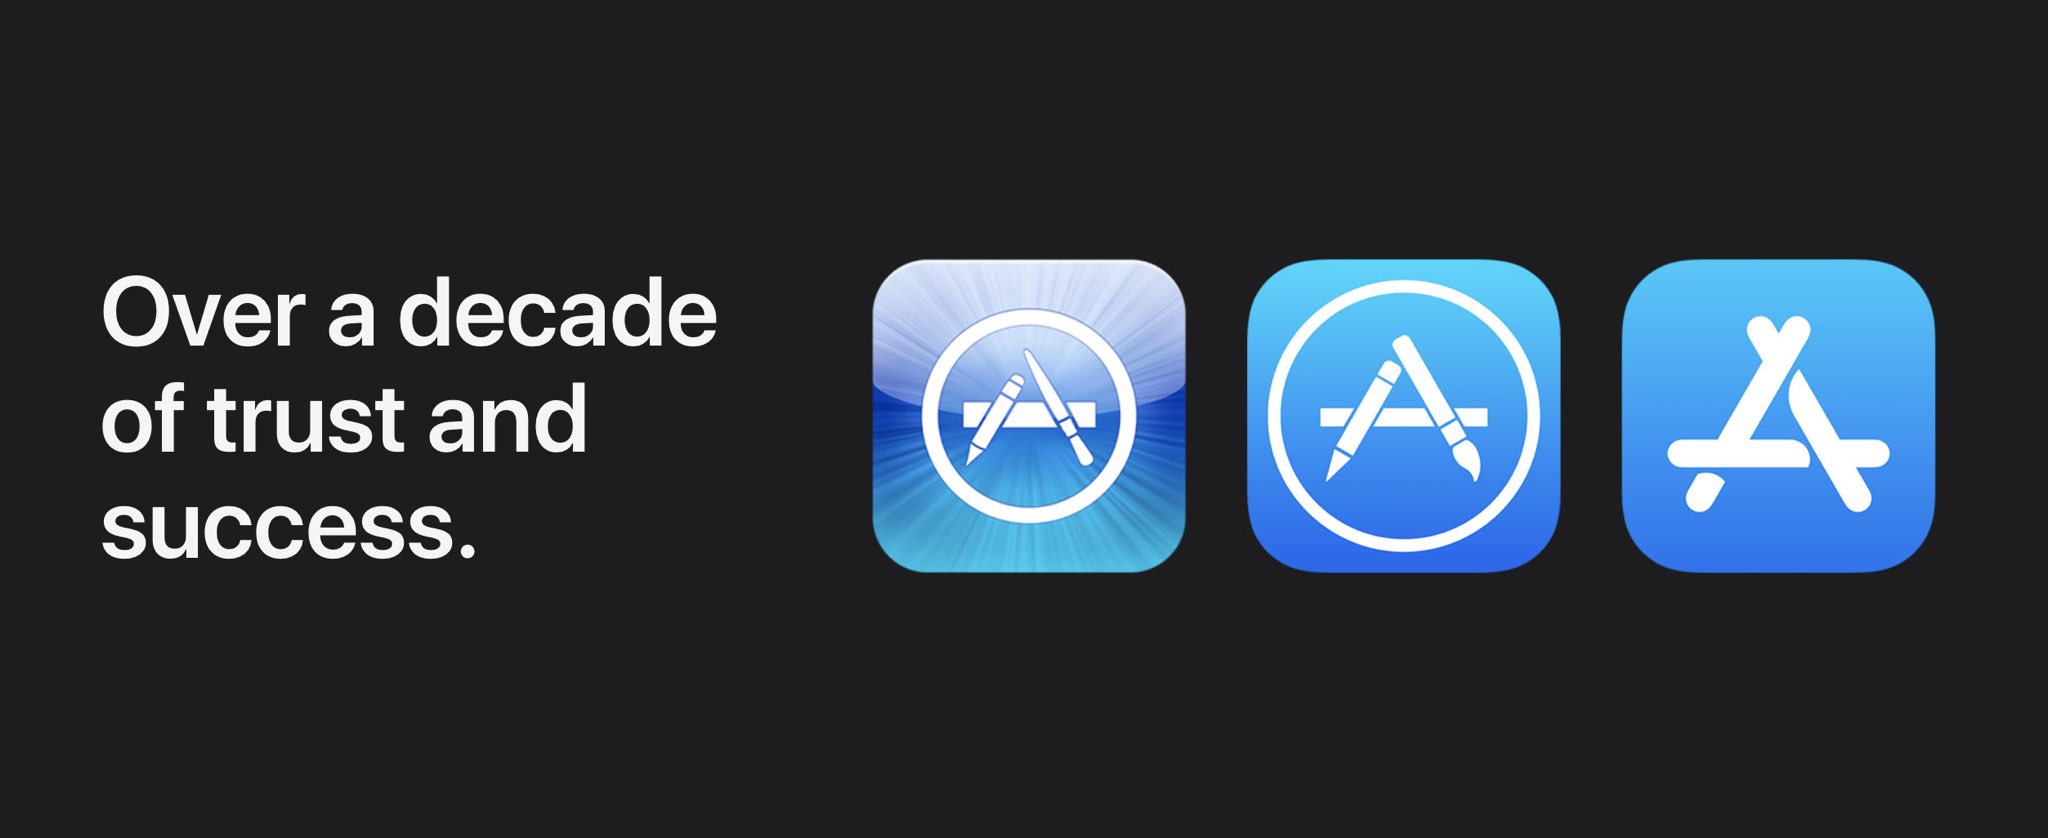 Banner de App Store con lema 